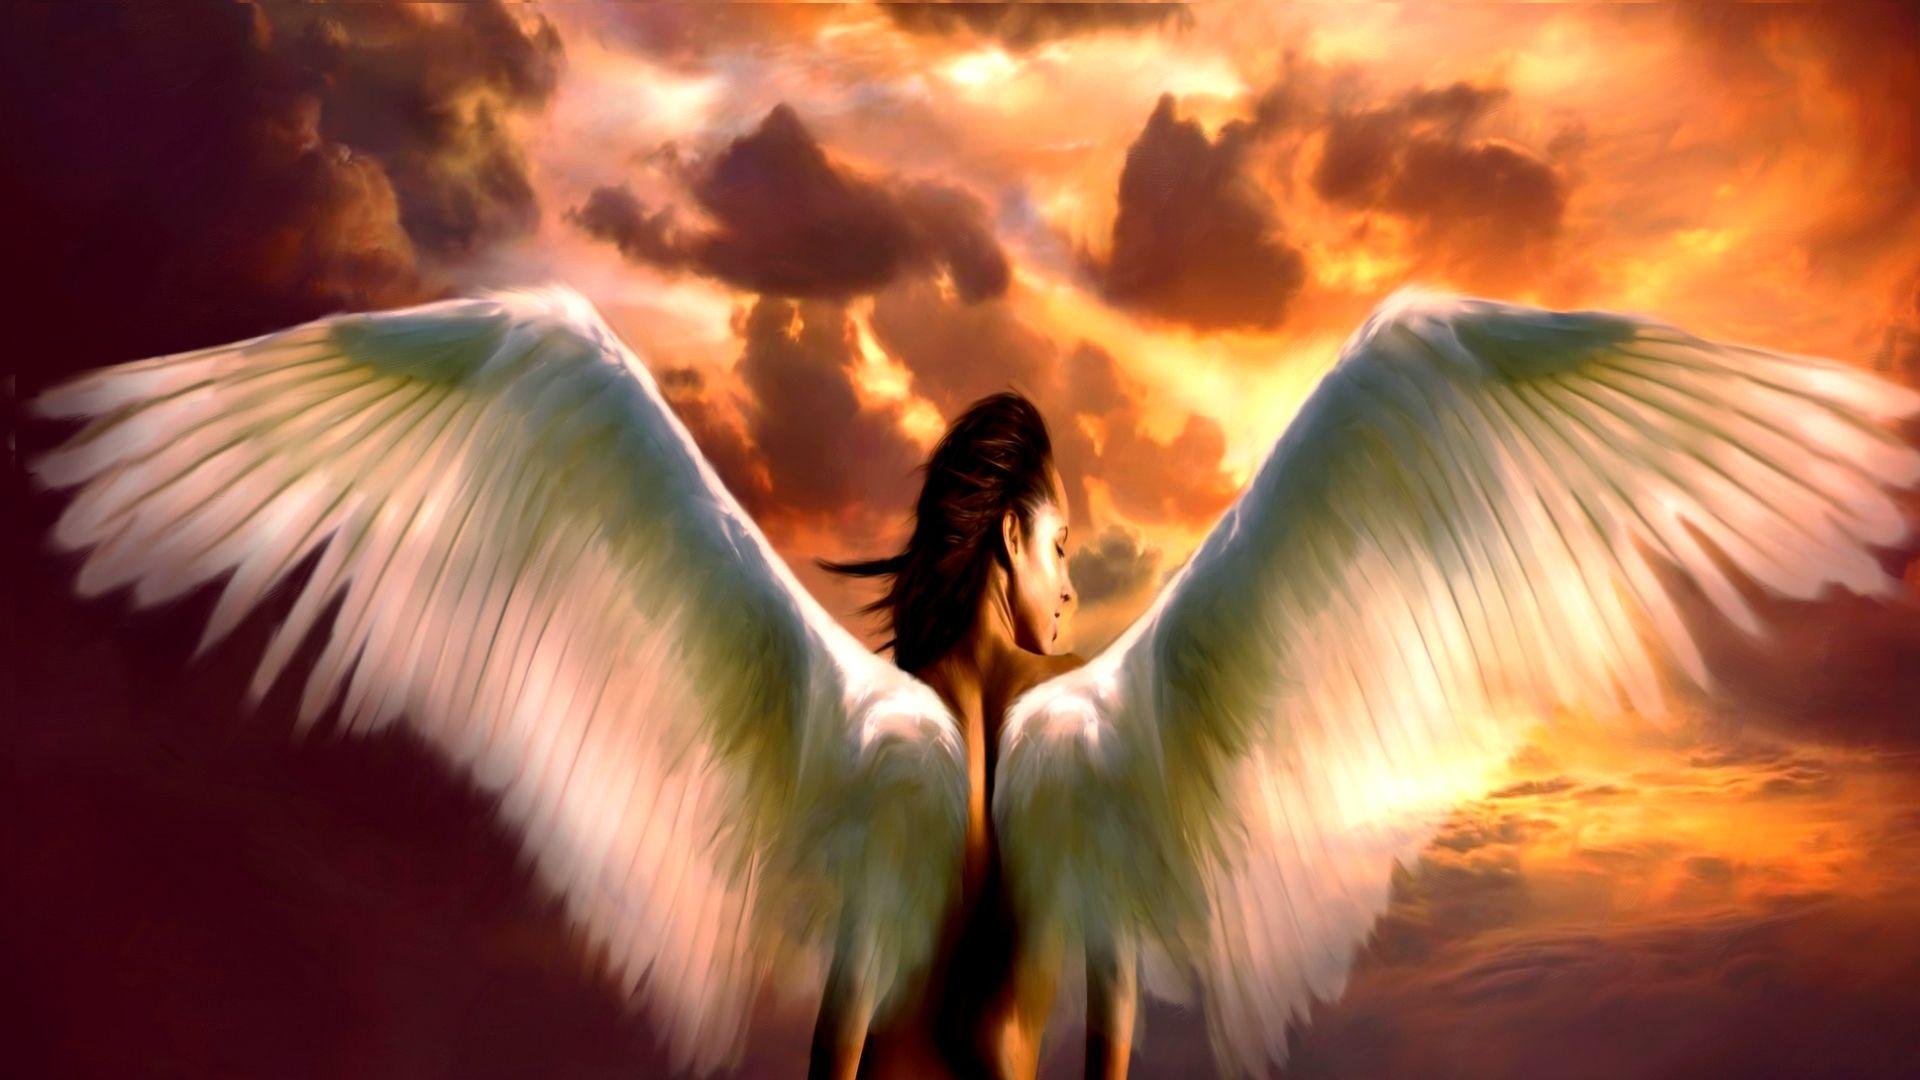 Fantasy Wallpaper. ANGEL. Angel wallpaper, Angel picture